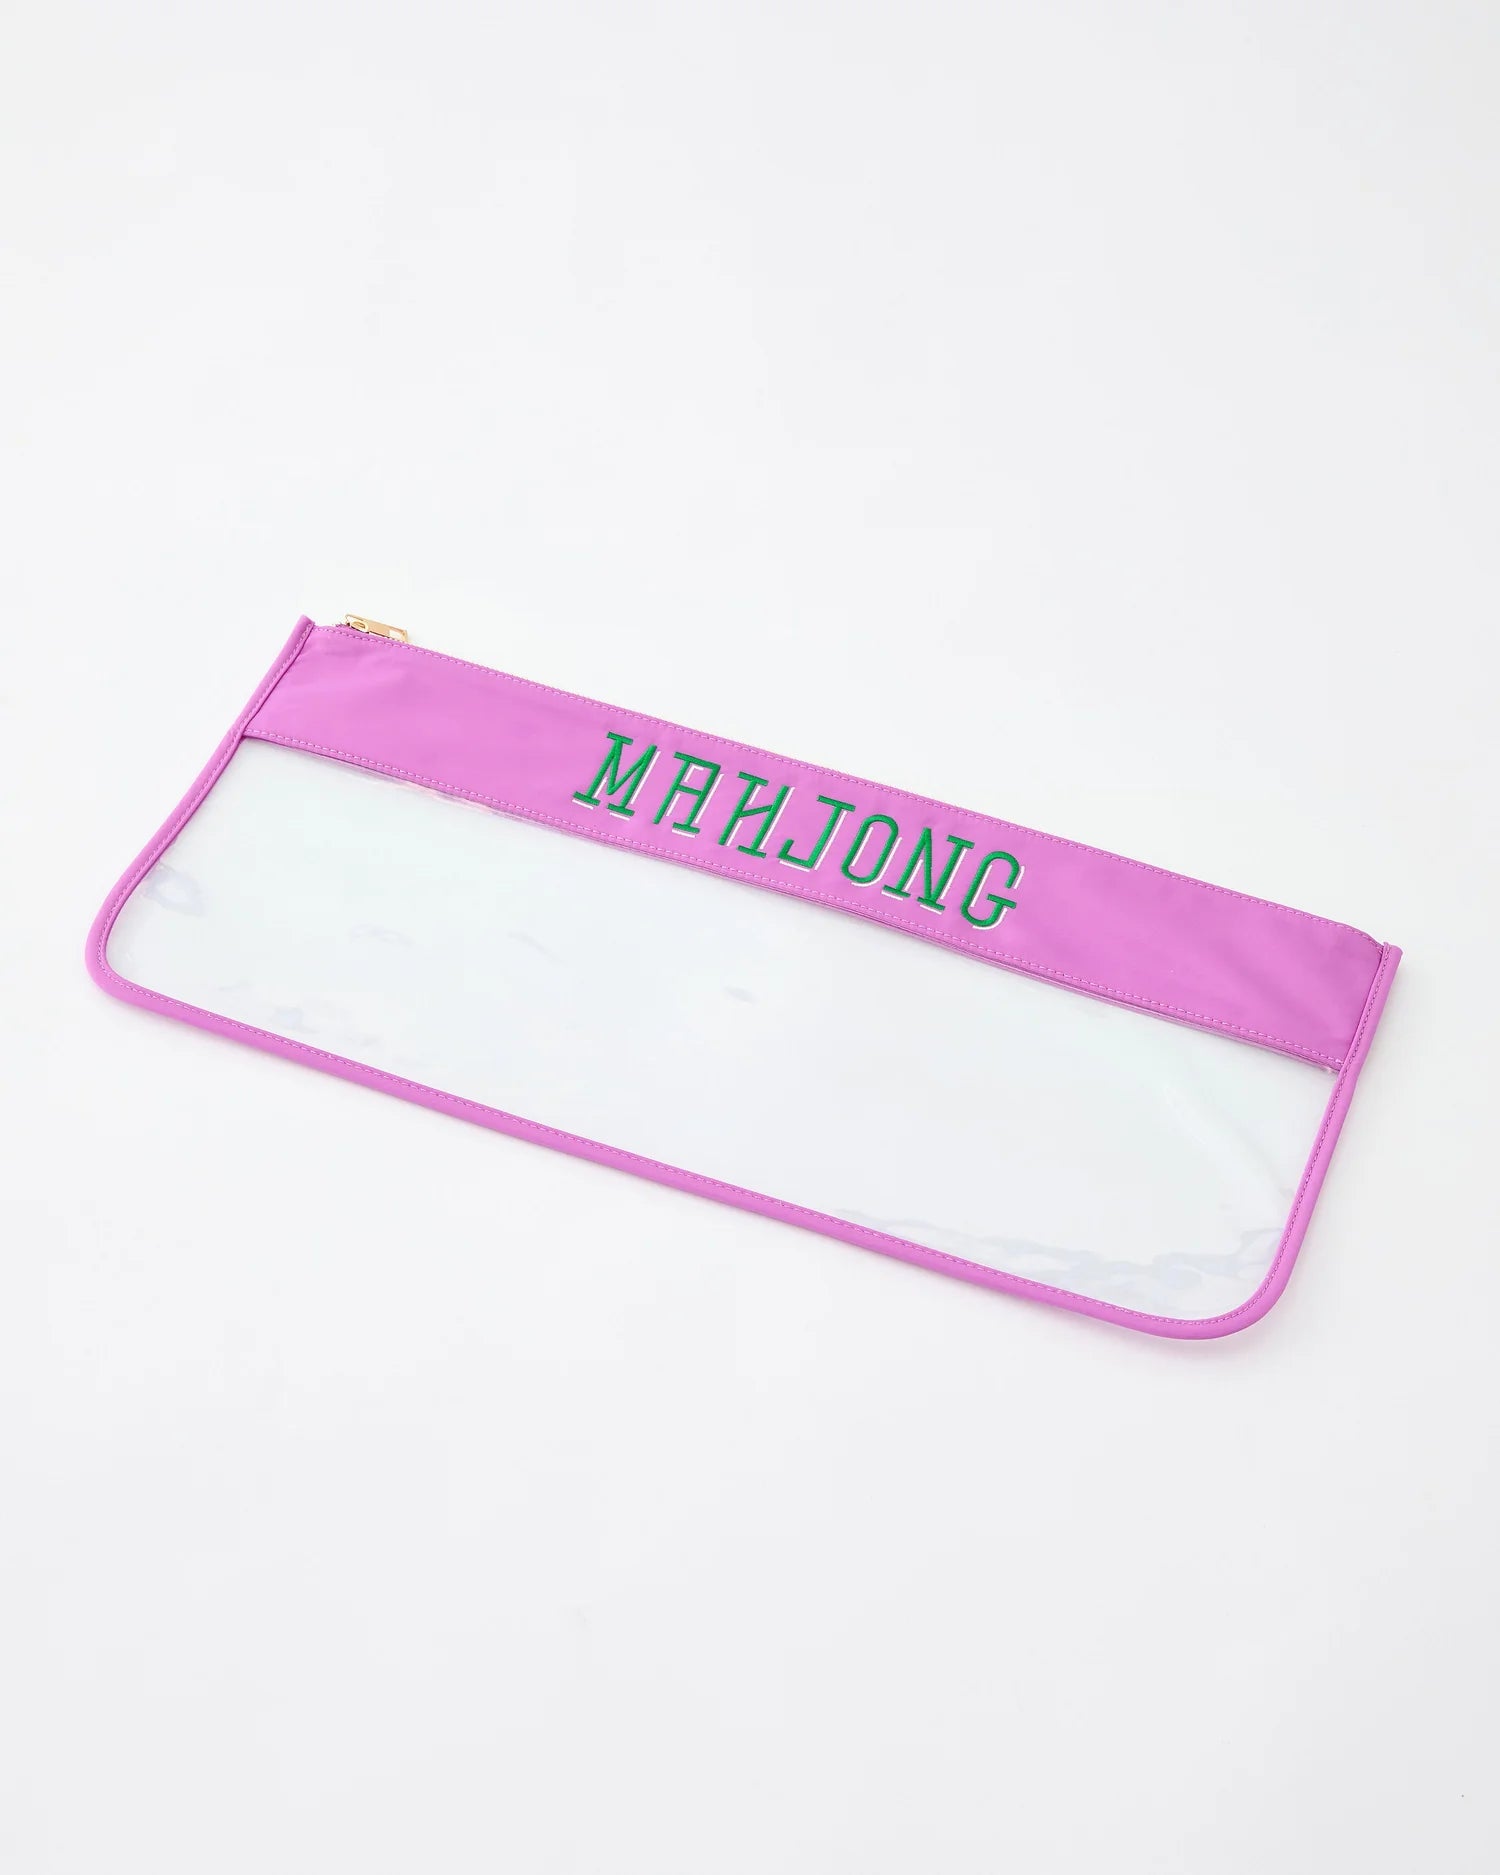 "Mahjong" Stitched Bag